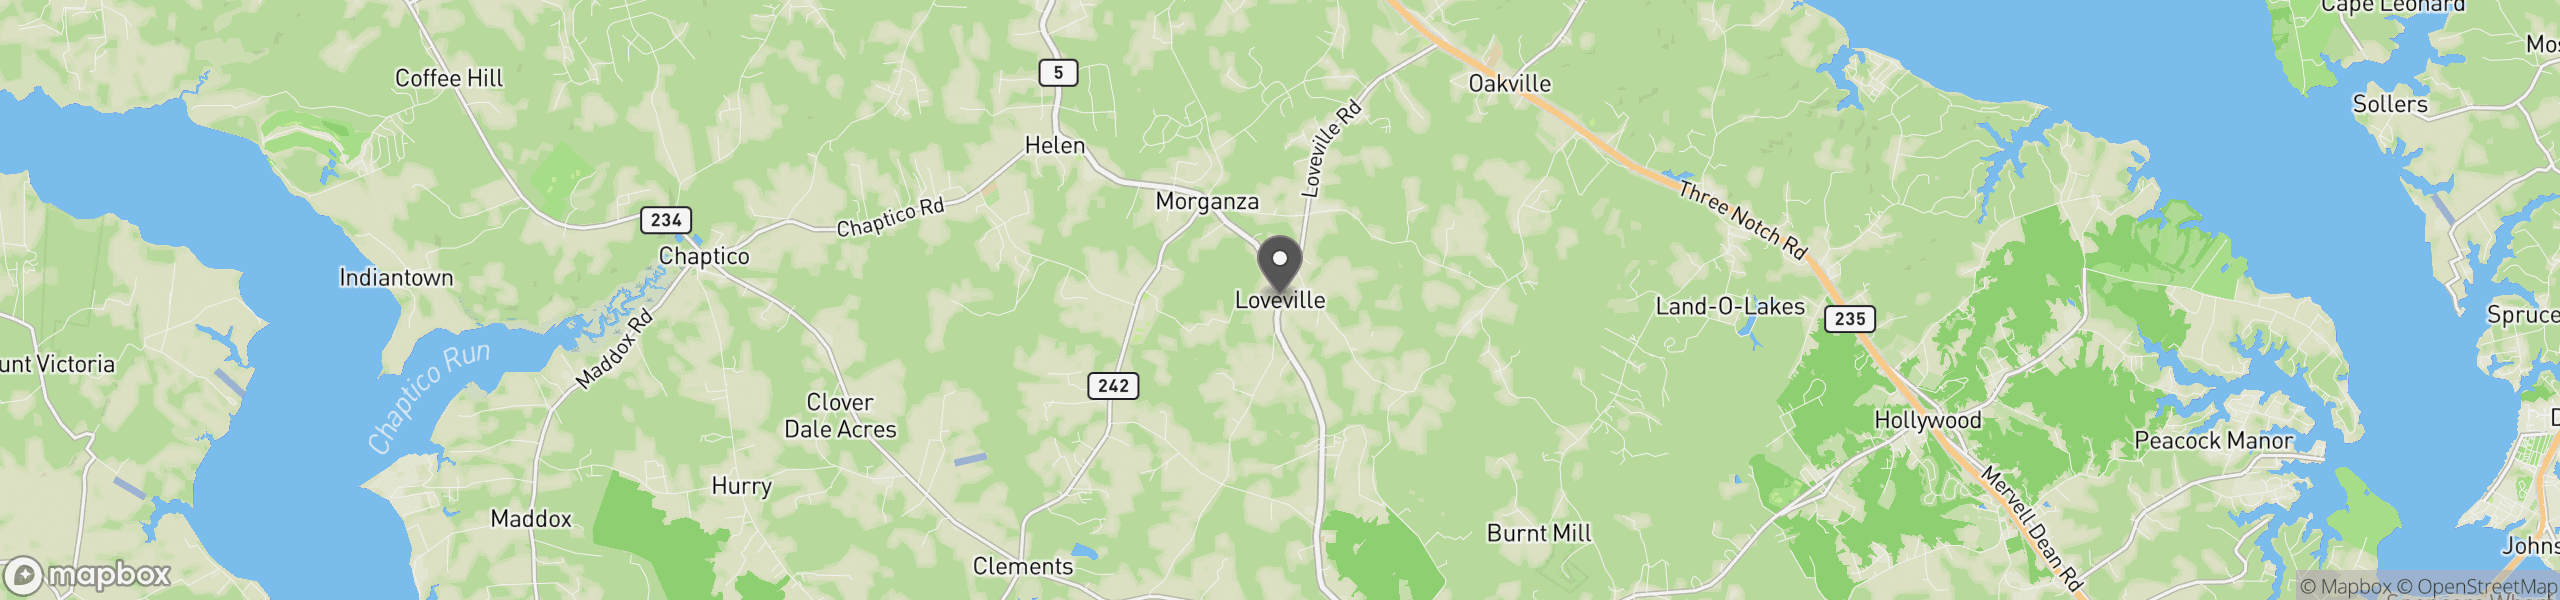 Loveville, MD 20656